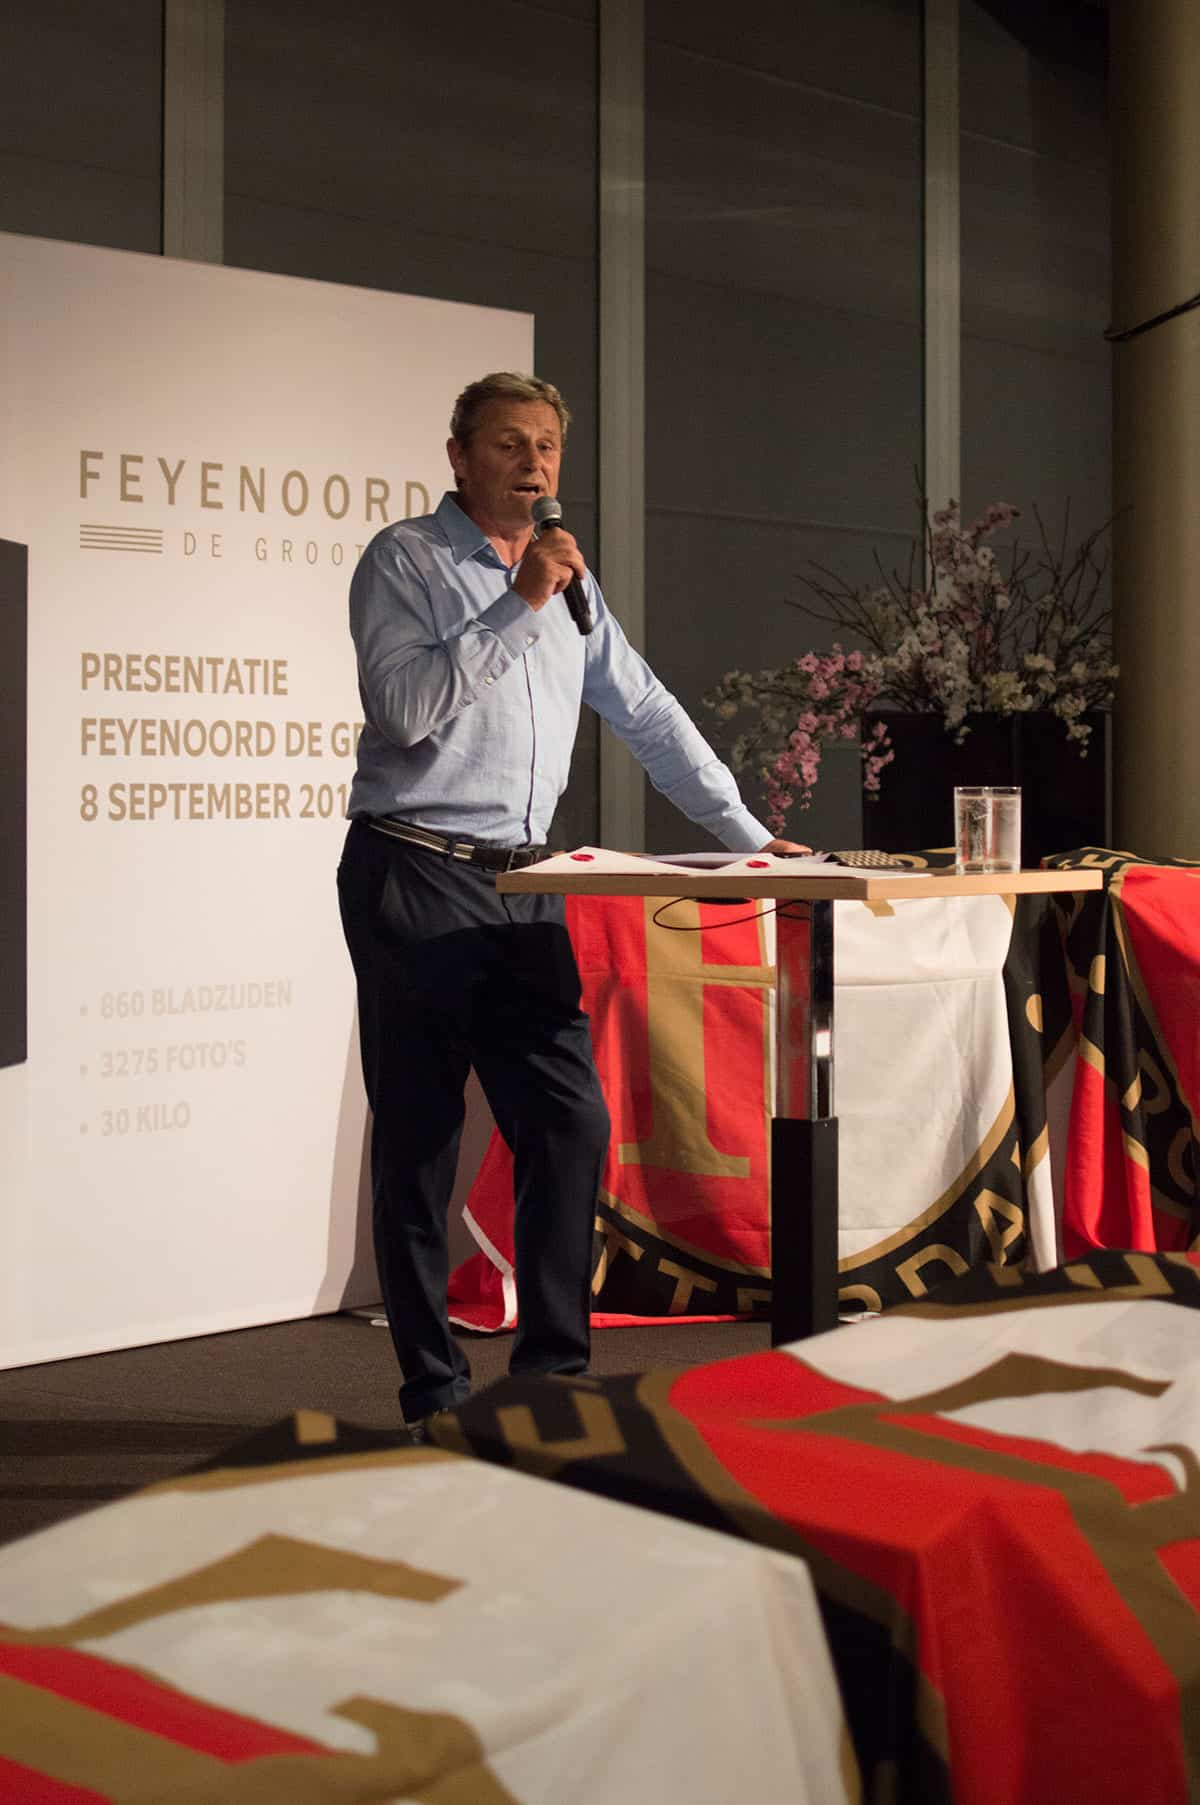 XXL Boek - Feyenoord de Grootste, Presentatieavond